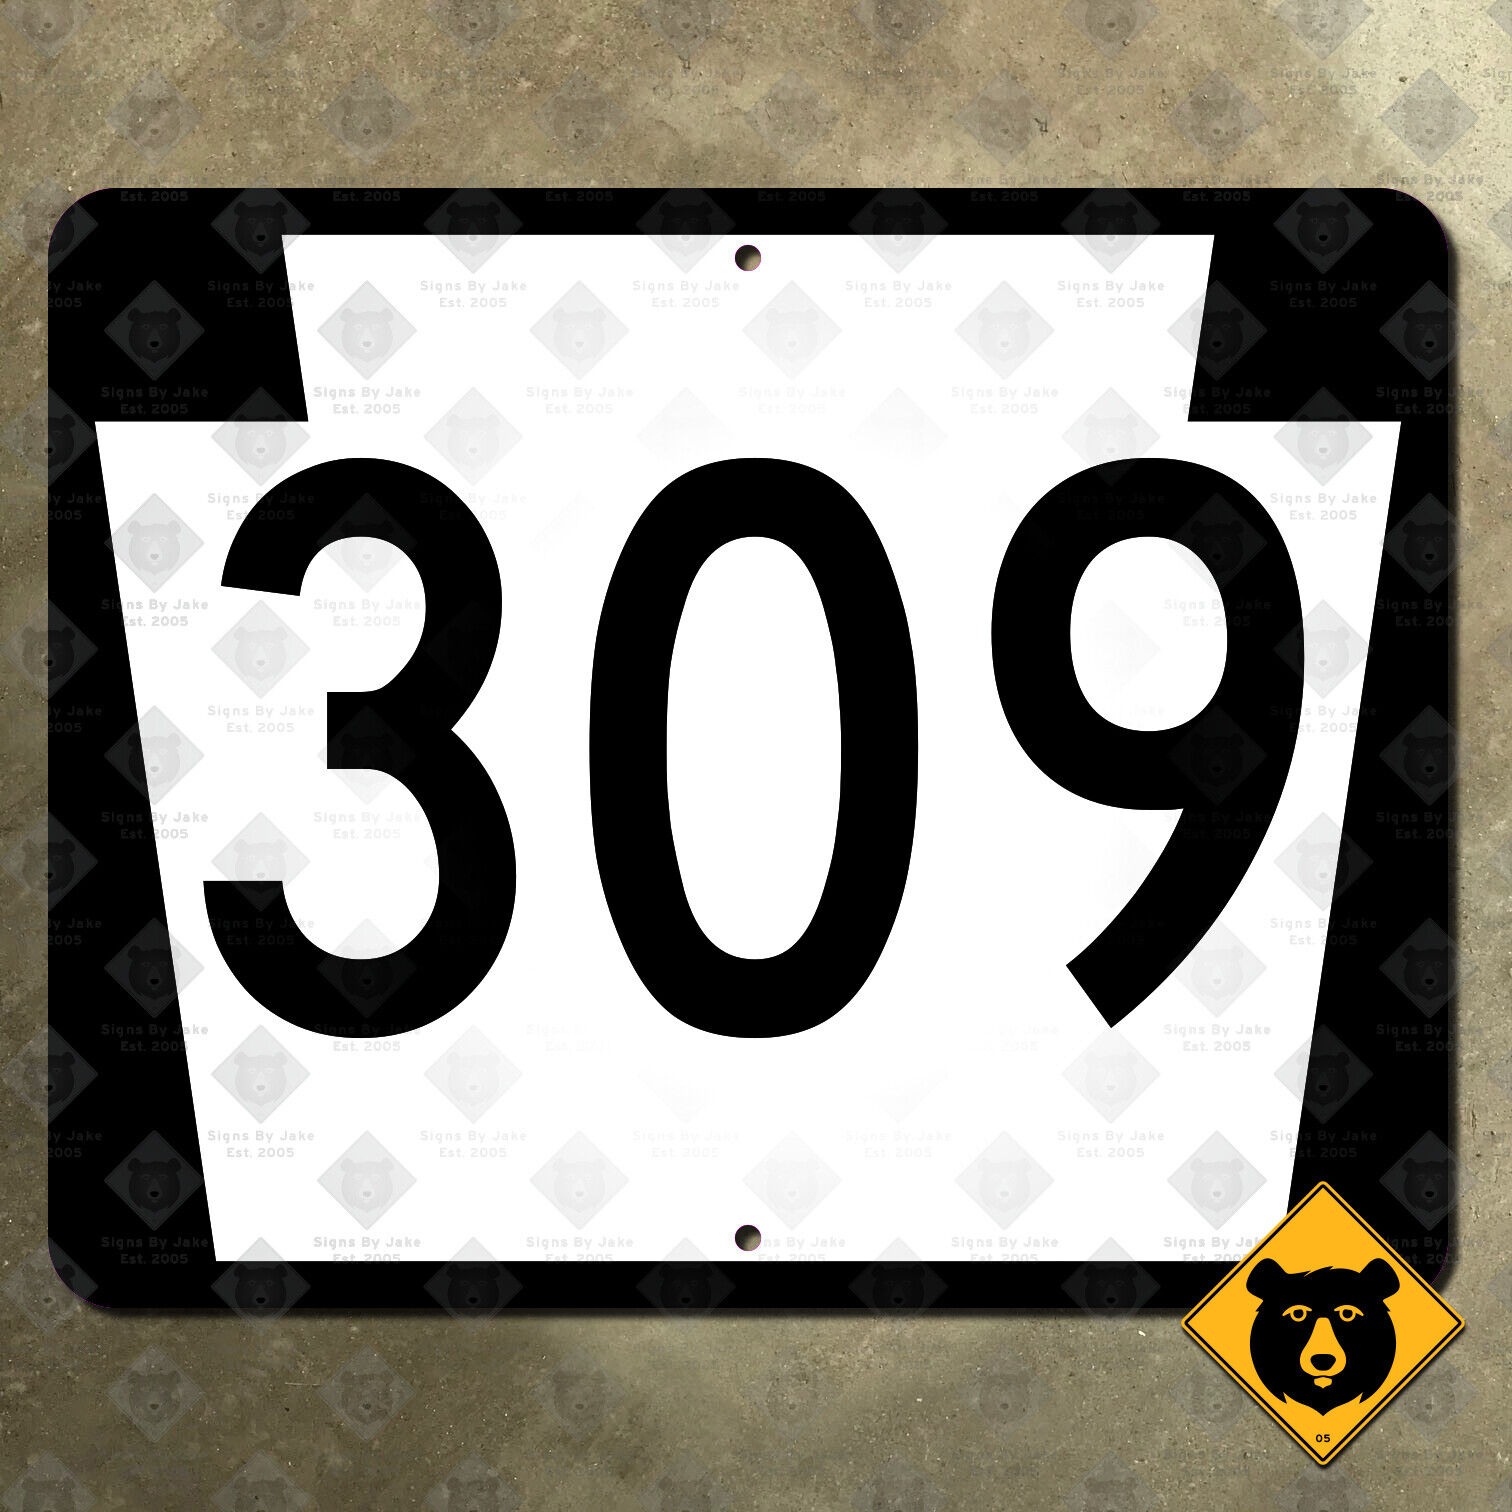 Pennsylvania state Route 309 highway road sign 1961 Philadelphia Allentown 12x9